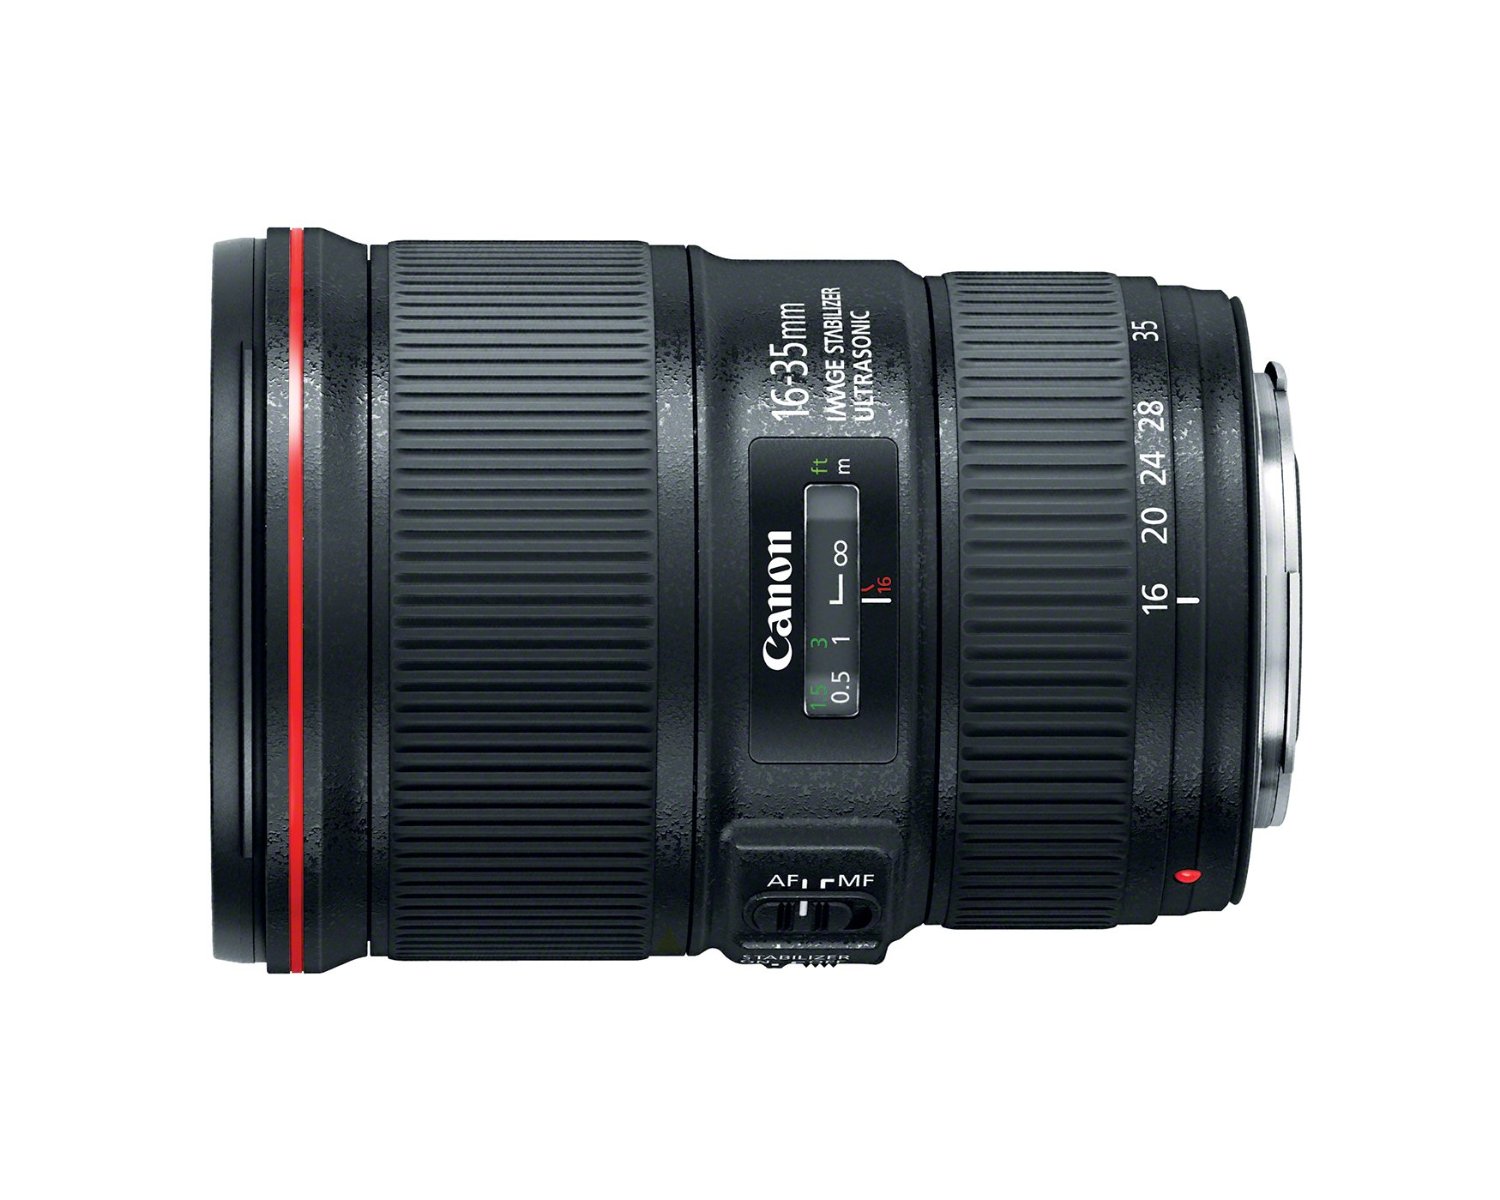 Canon Obiektyw EF 16-35mm f/4L IS USM